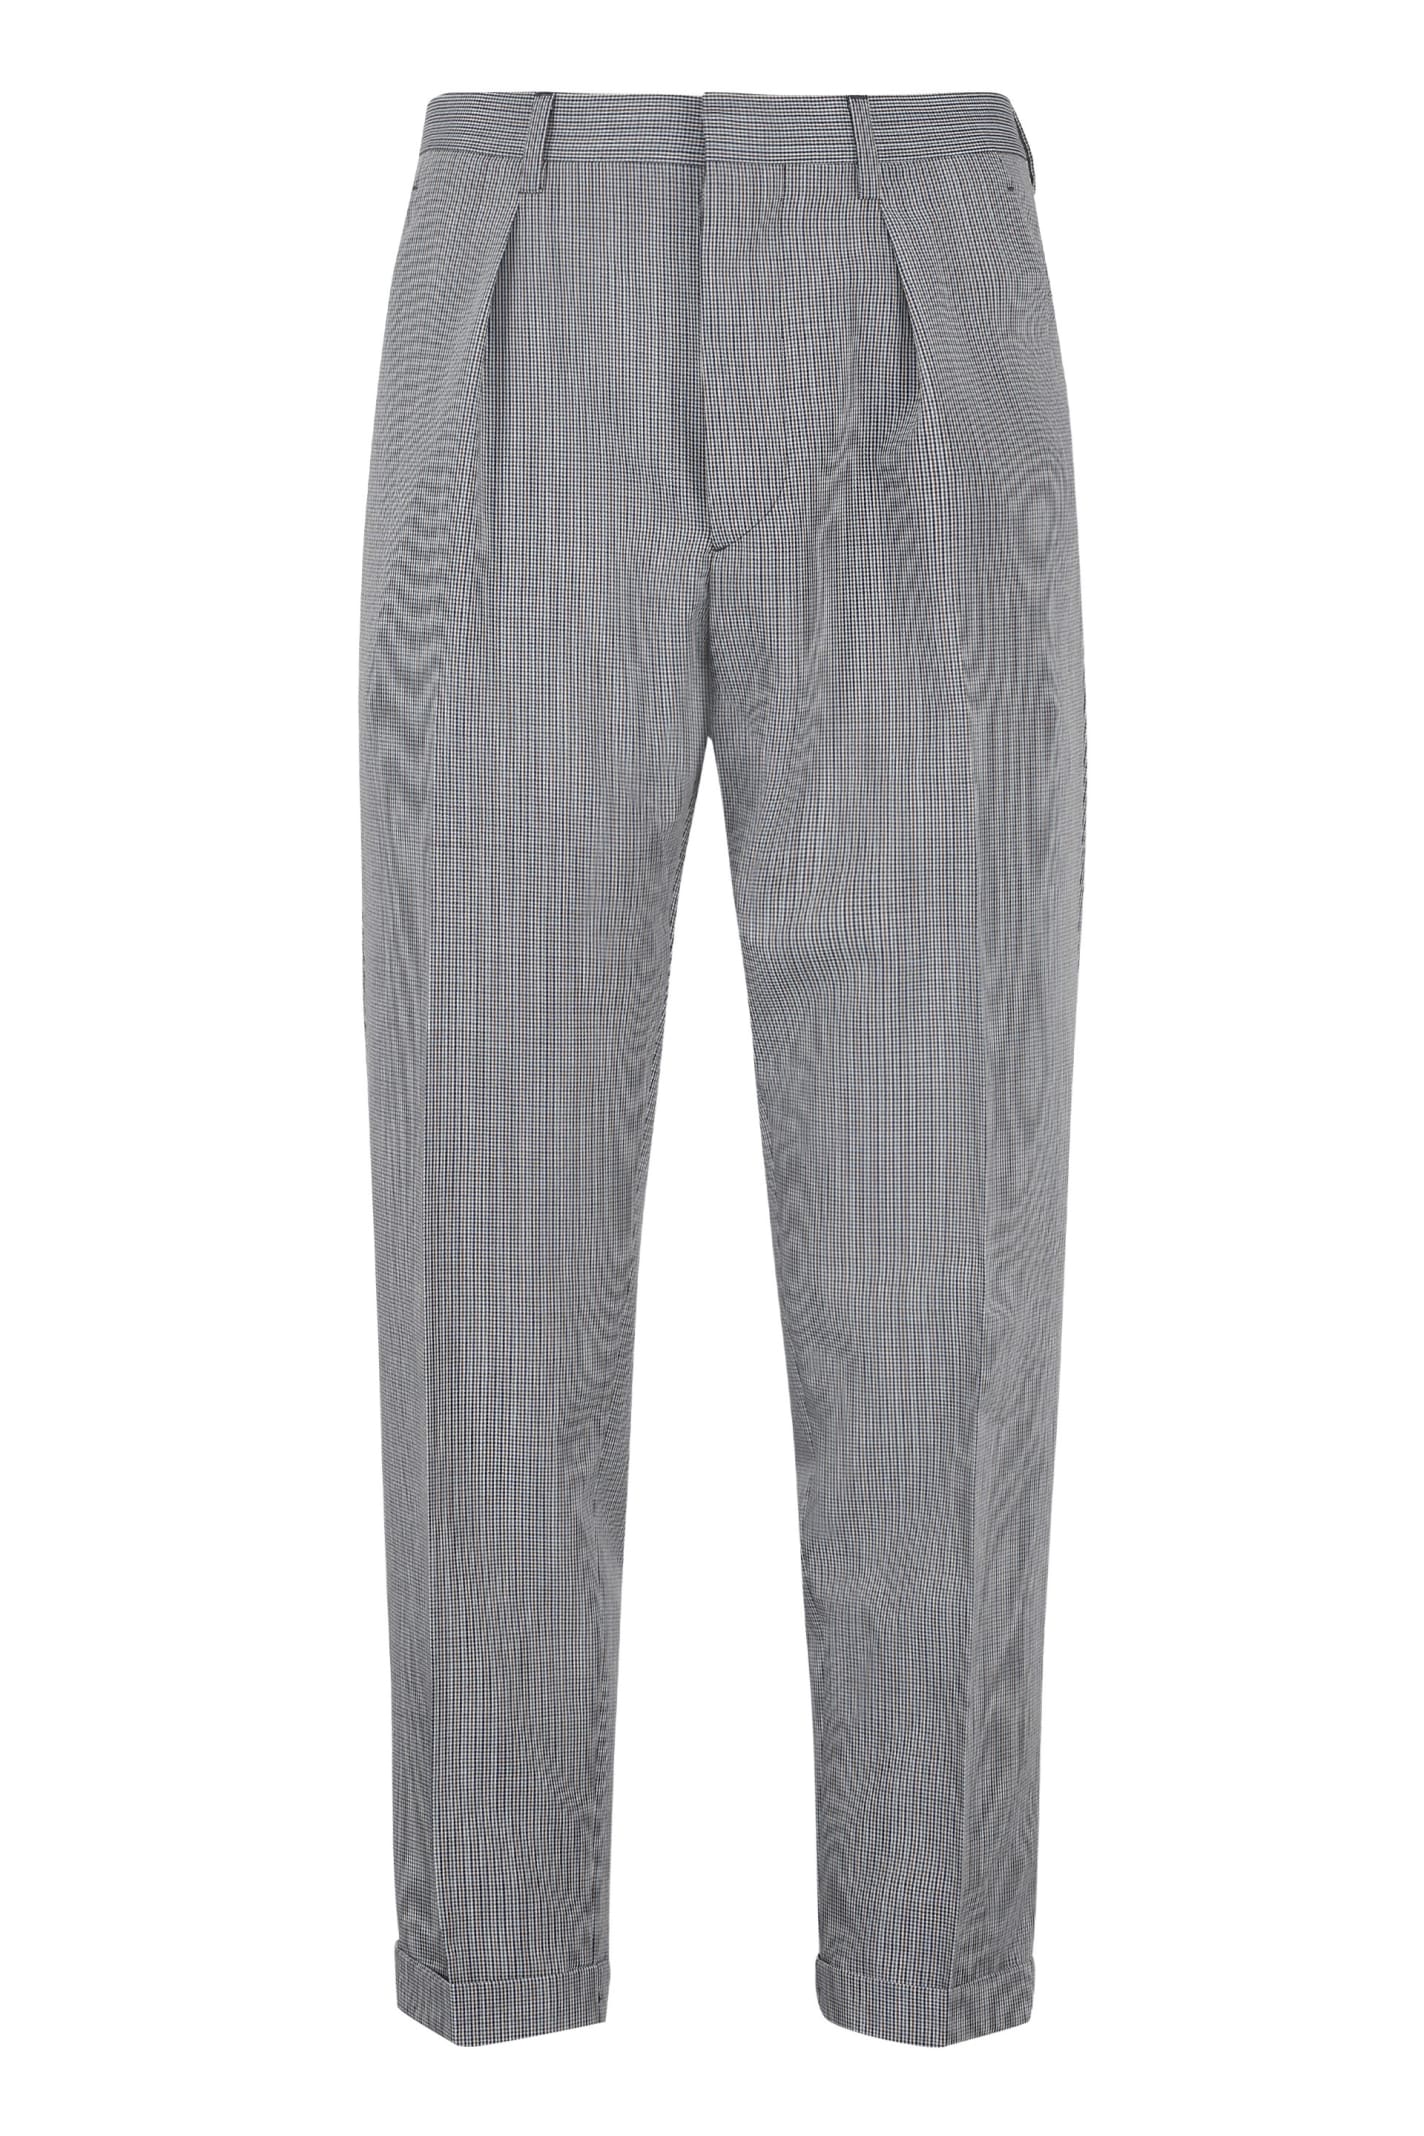 Prada Wool-mohair Blend Tailored Trousers